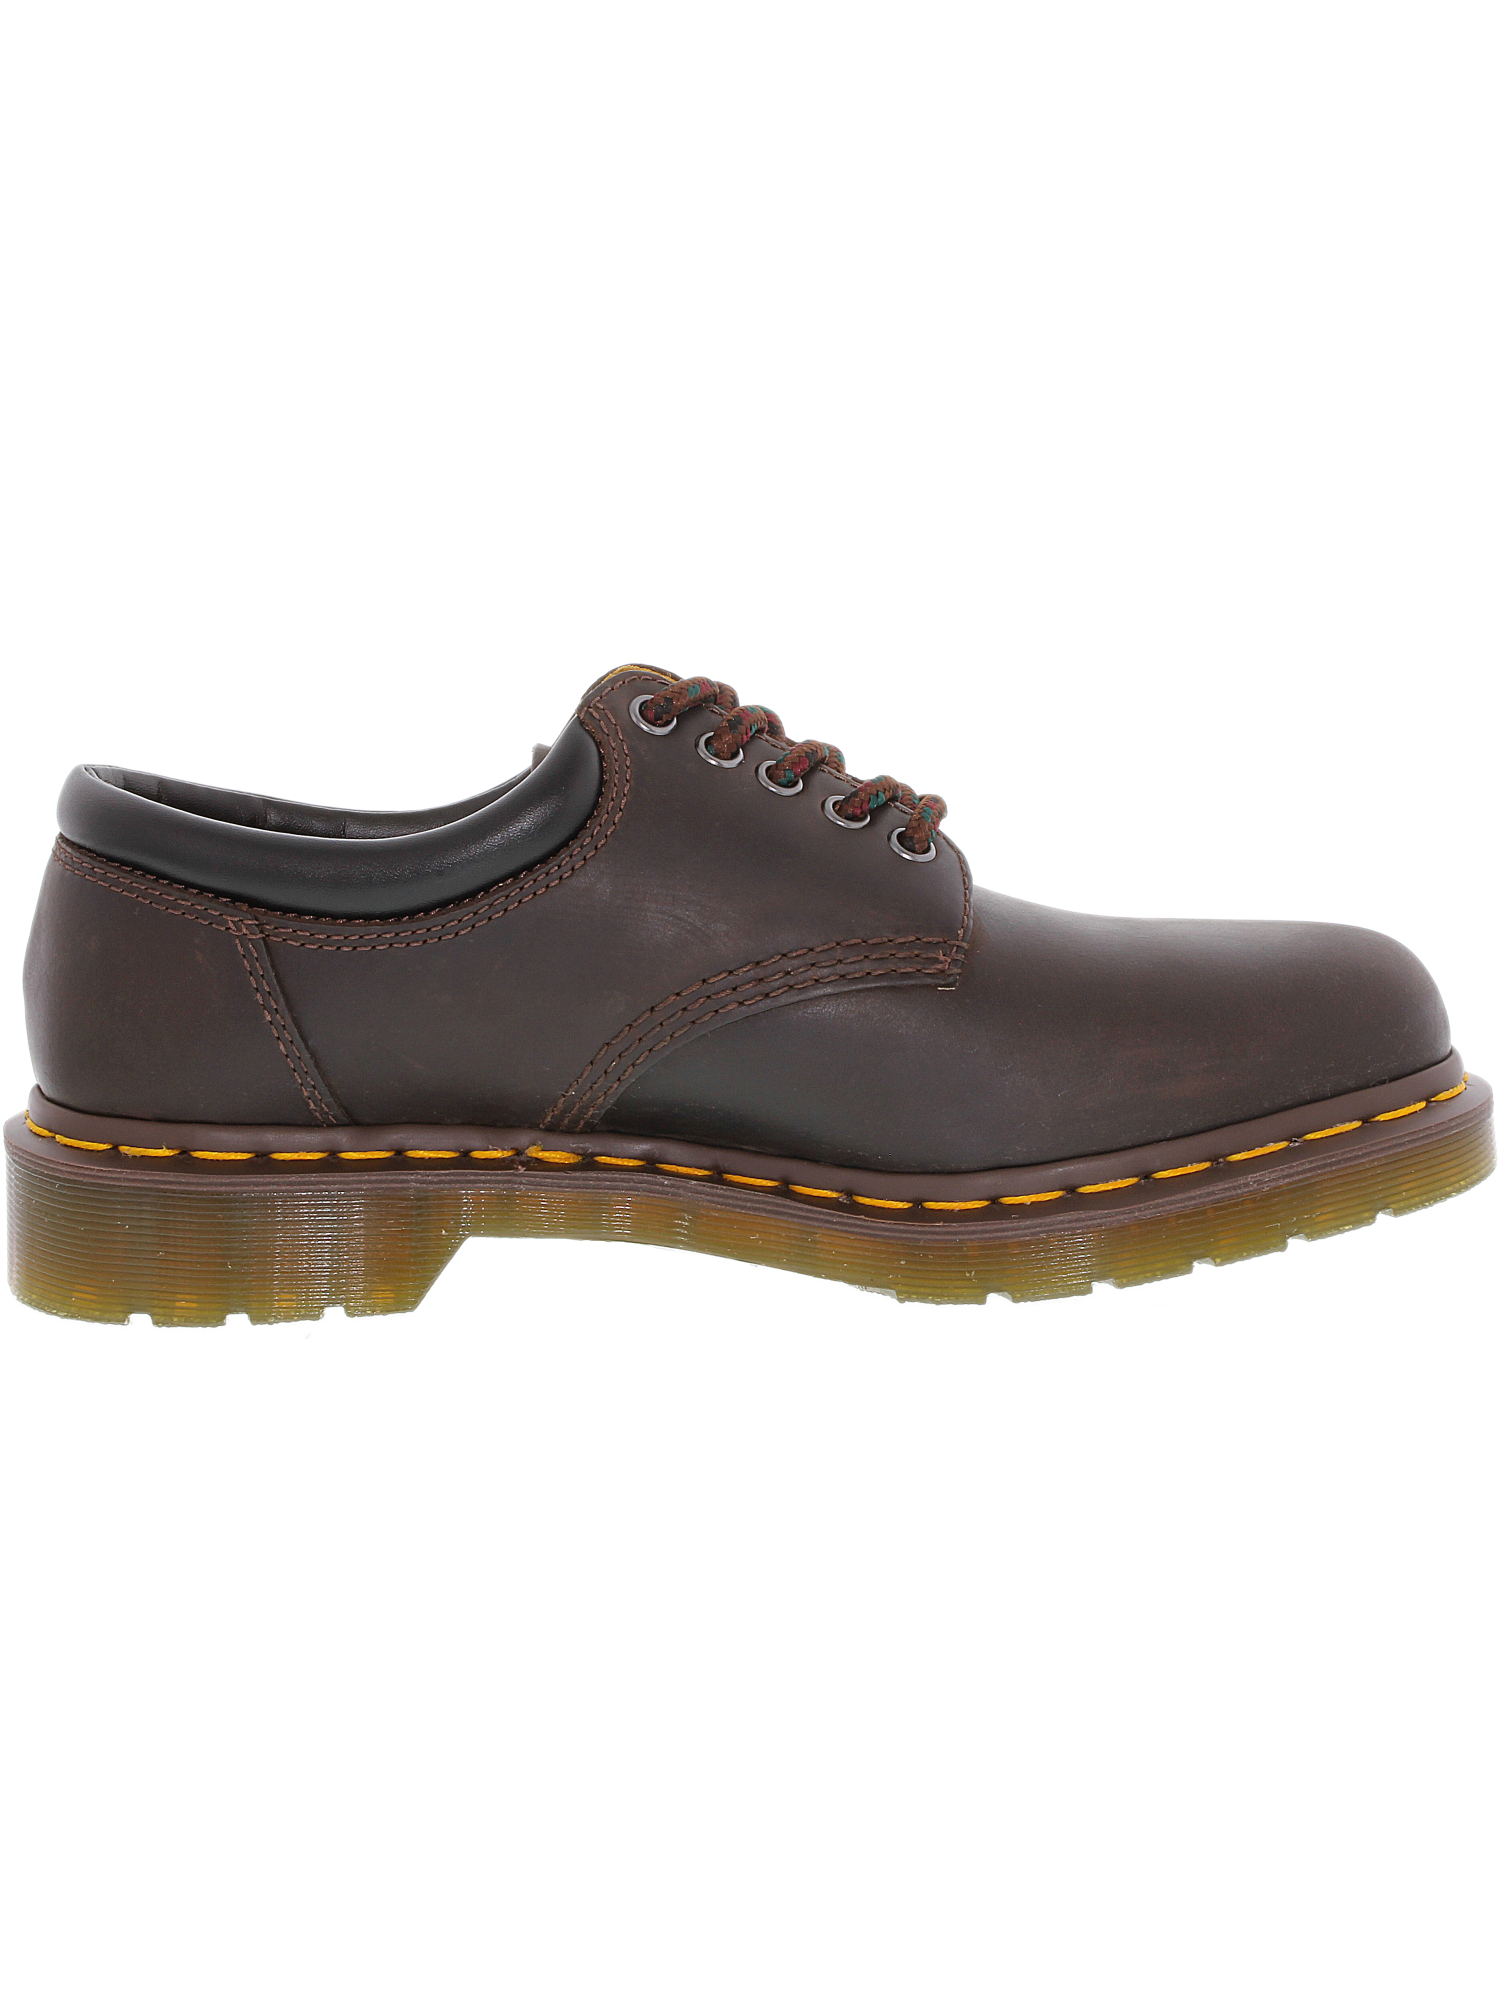 Dr. Martens Men's 8053 Lace-Up Ankle-High Leather Oxford Shoe | eBay